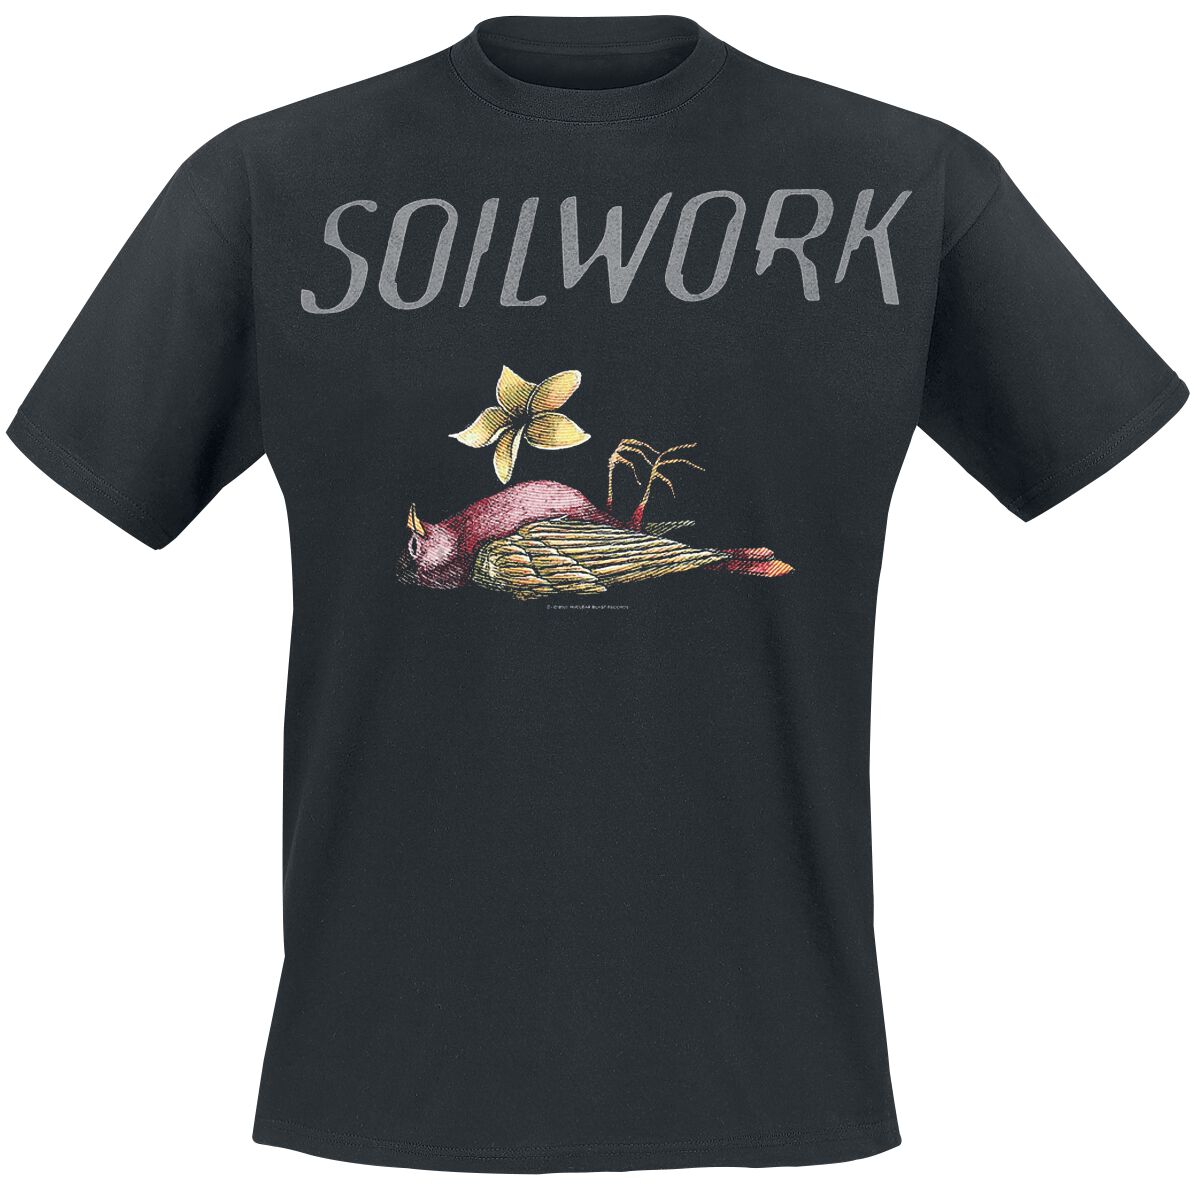 Soilwork Some Words T-Shirt black